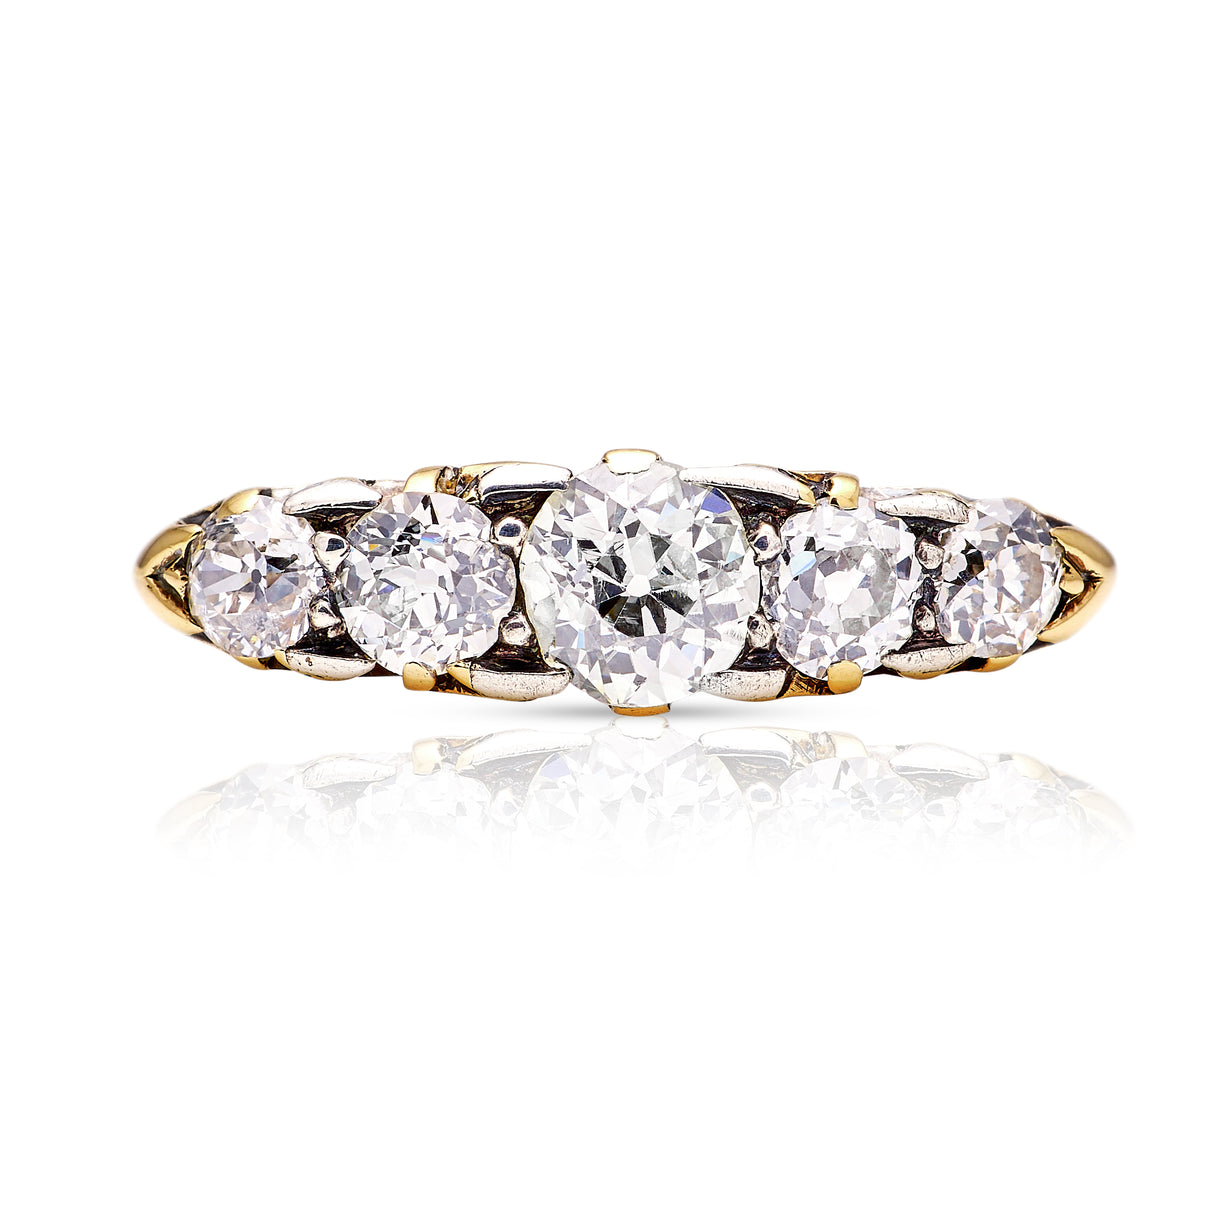 Antique, Edwardian diamond half hoop engagement ring, 18ct yellow gold